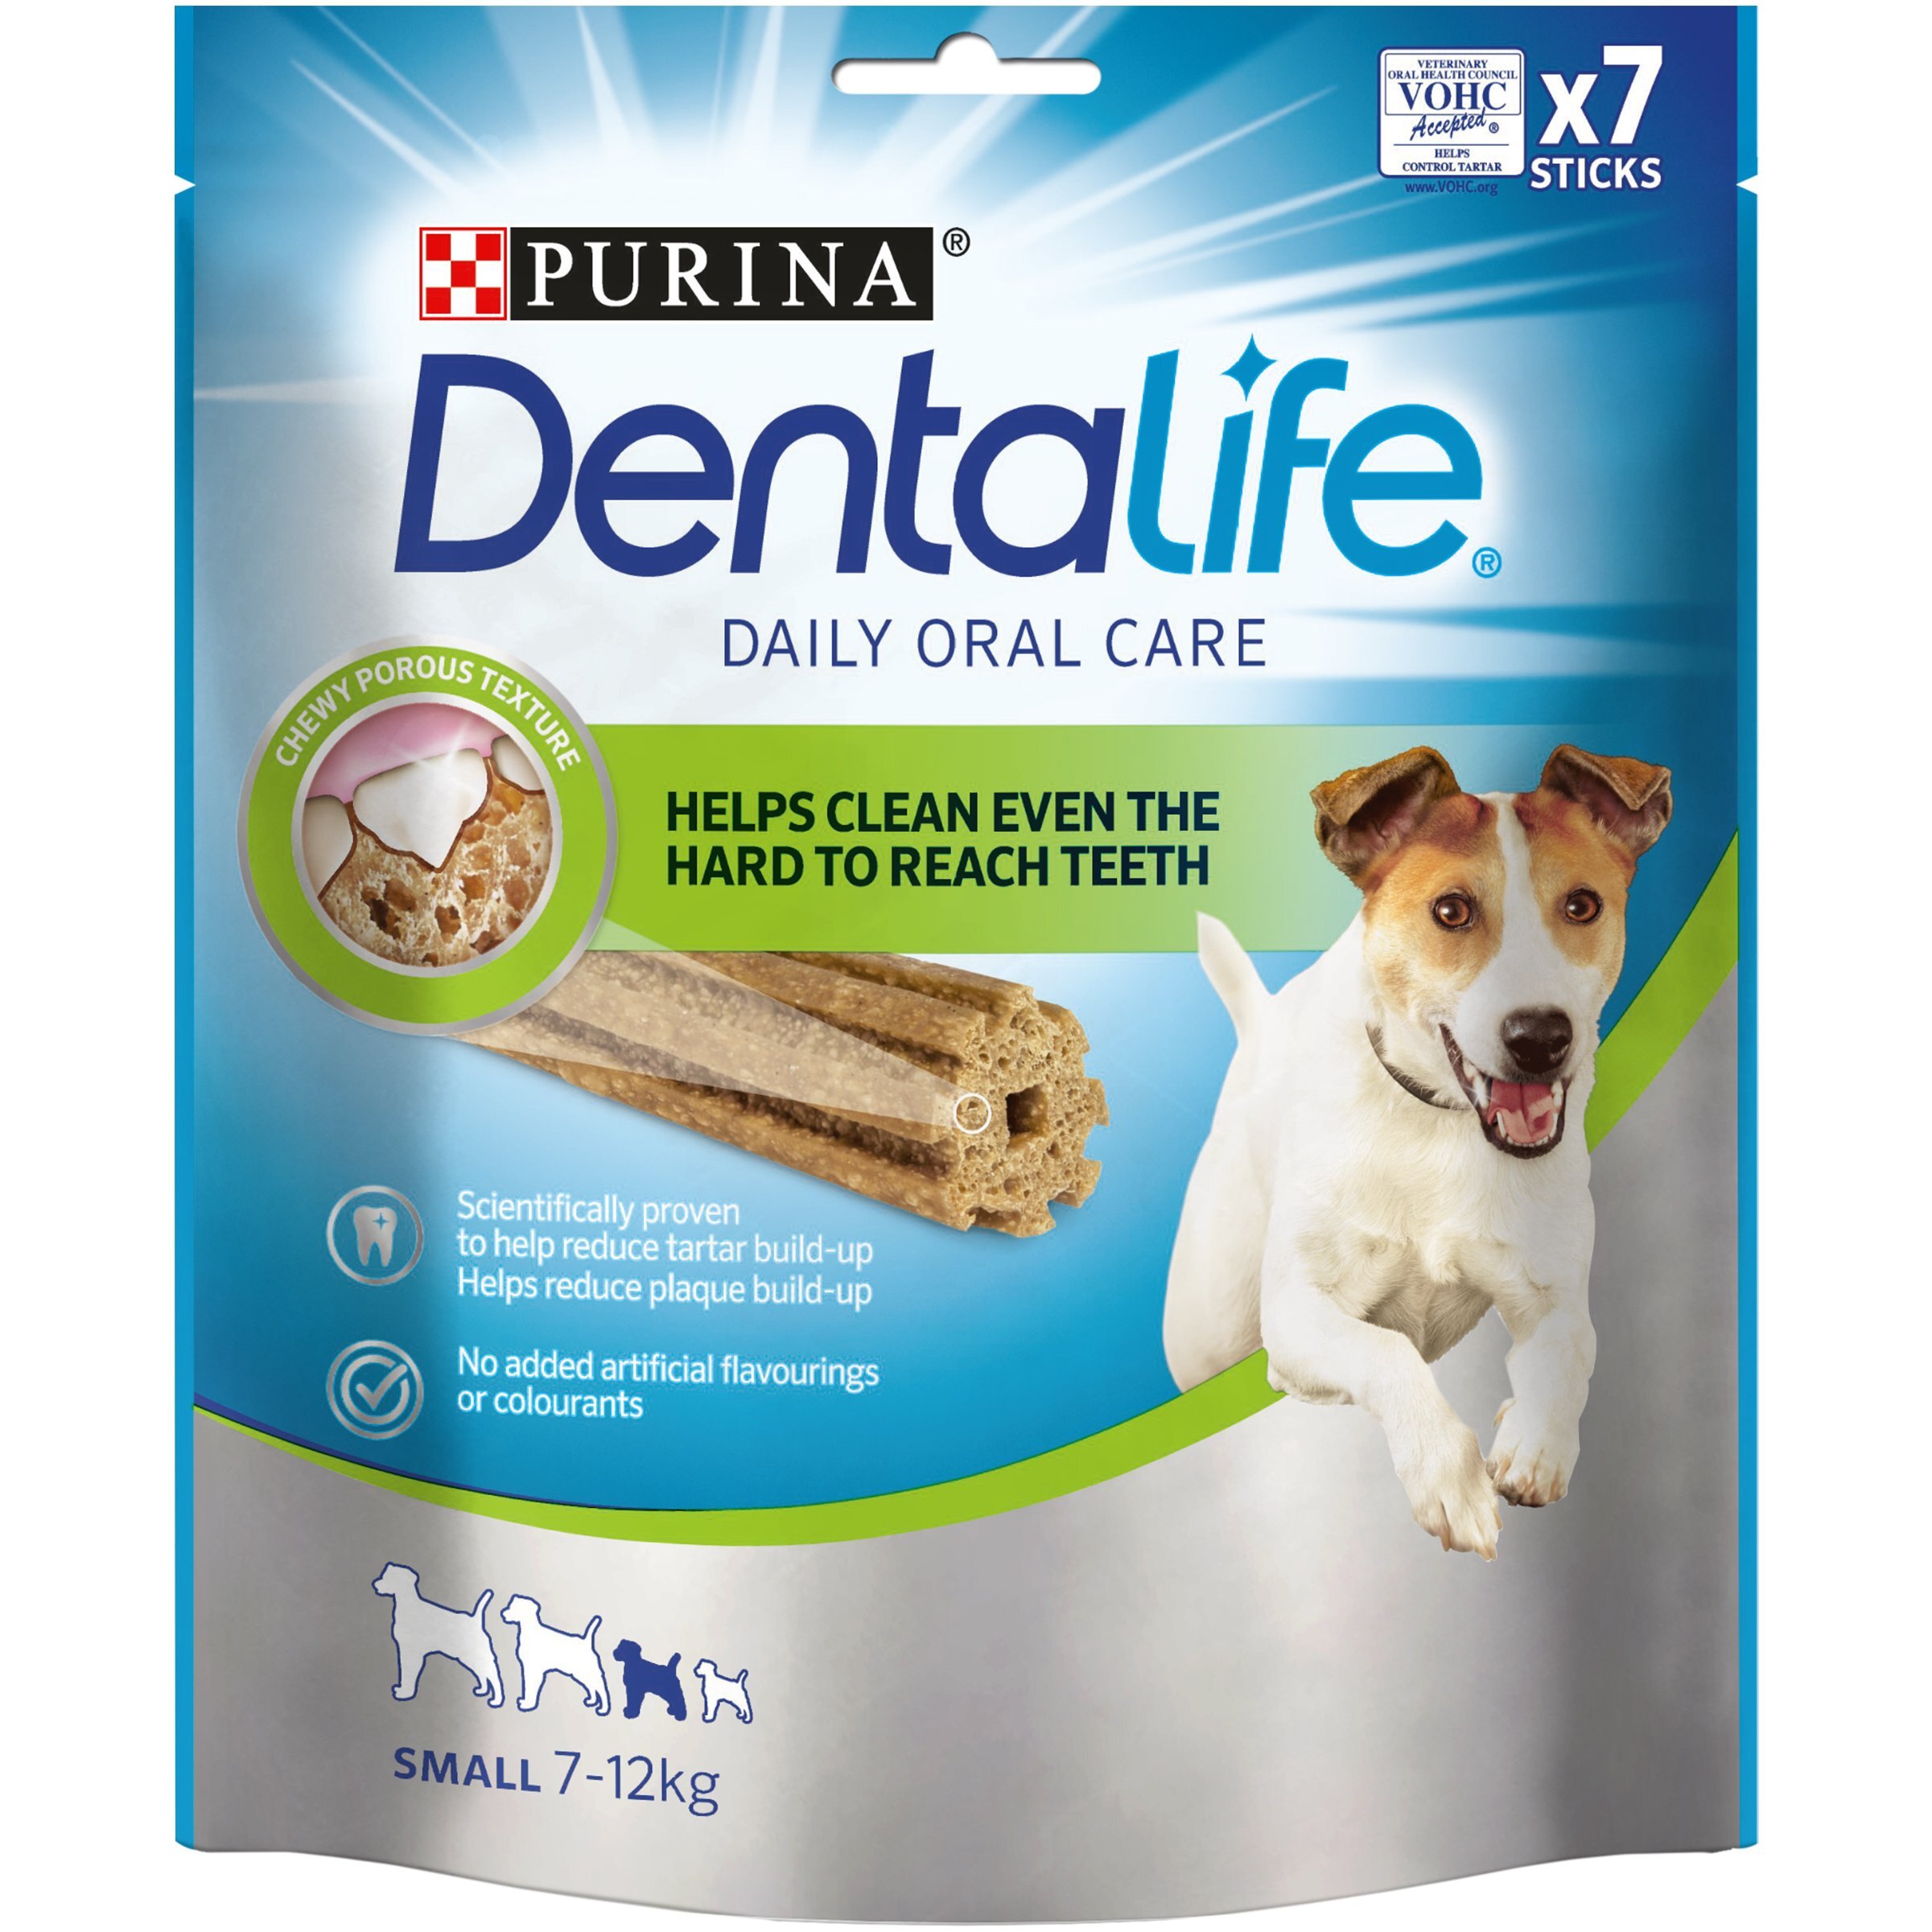 DentaLife Small Dog 6 x 115g (7 Sticks)